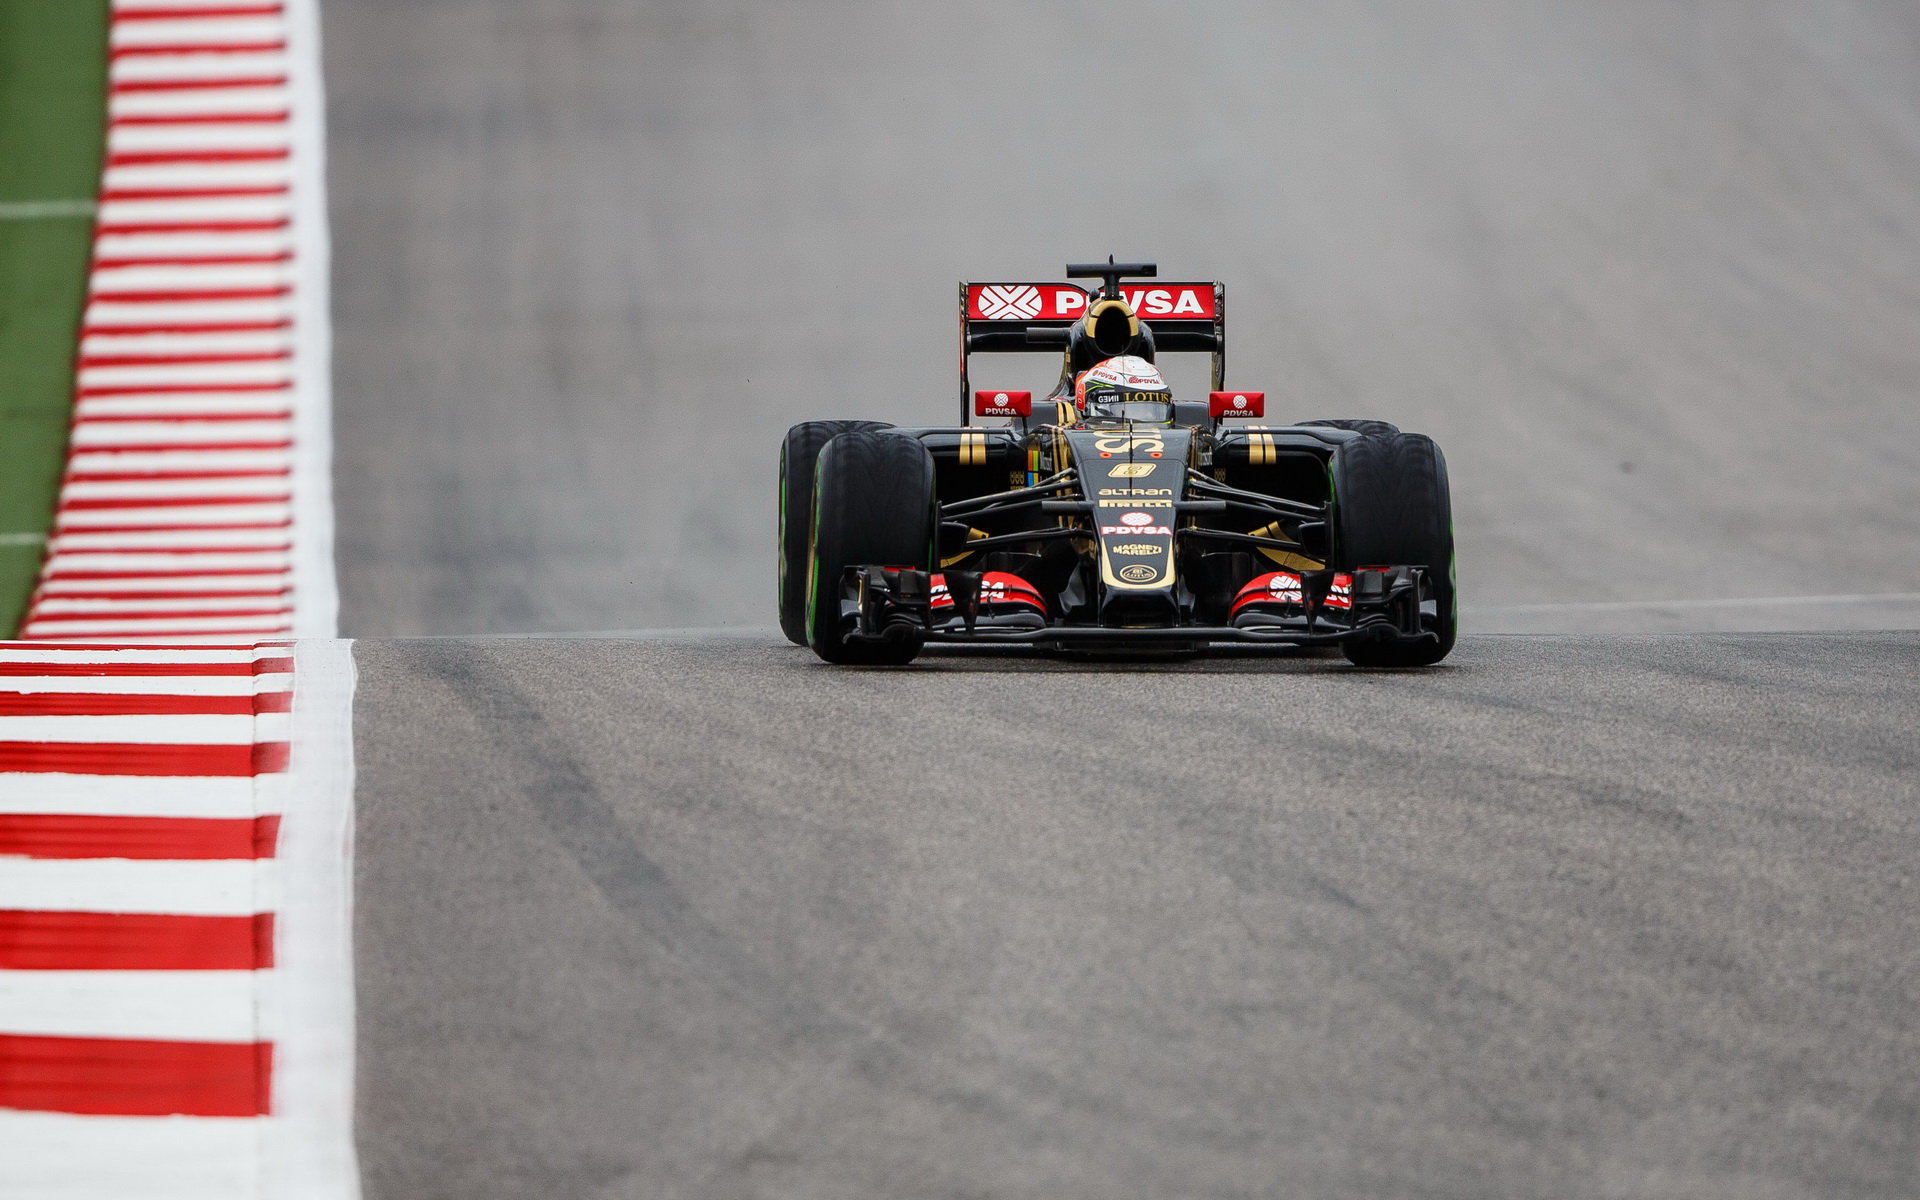 Romain Grosjean v Austinu